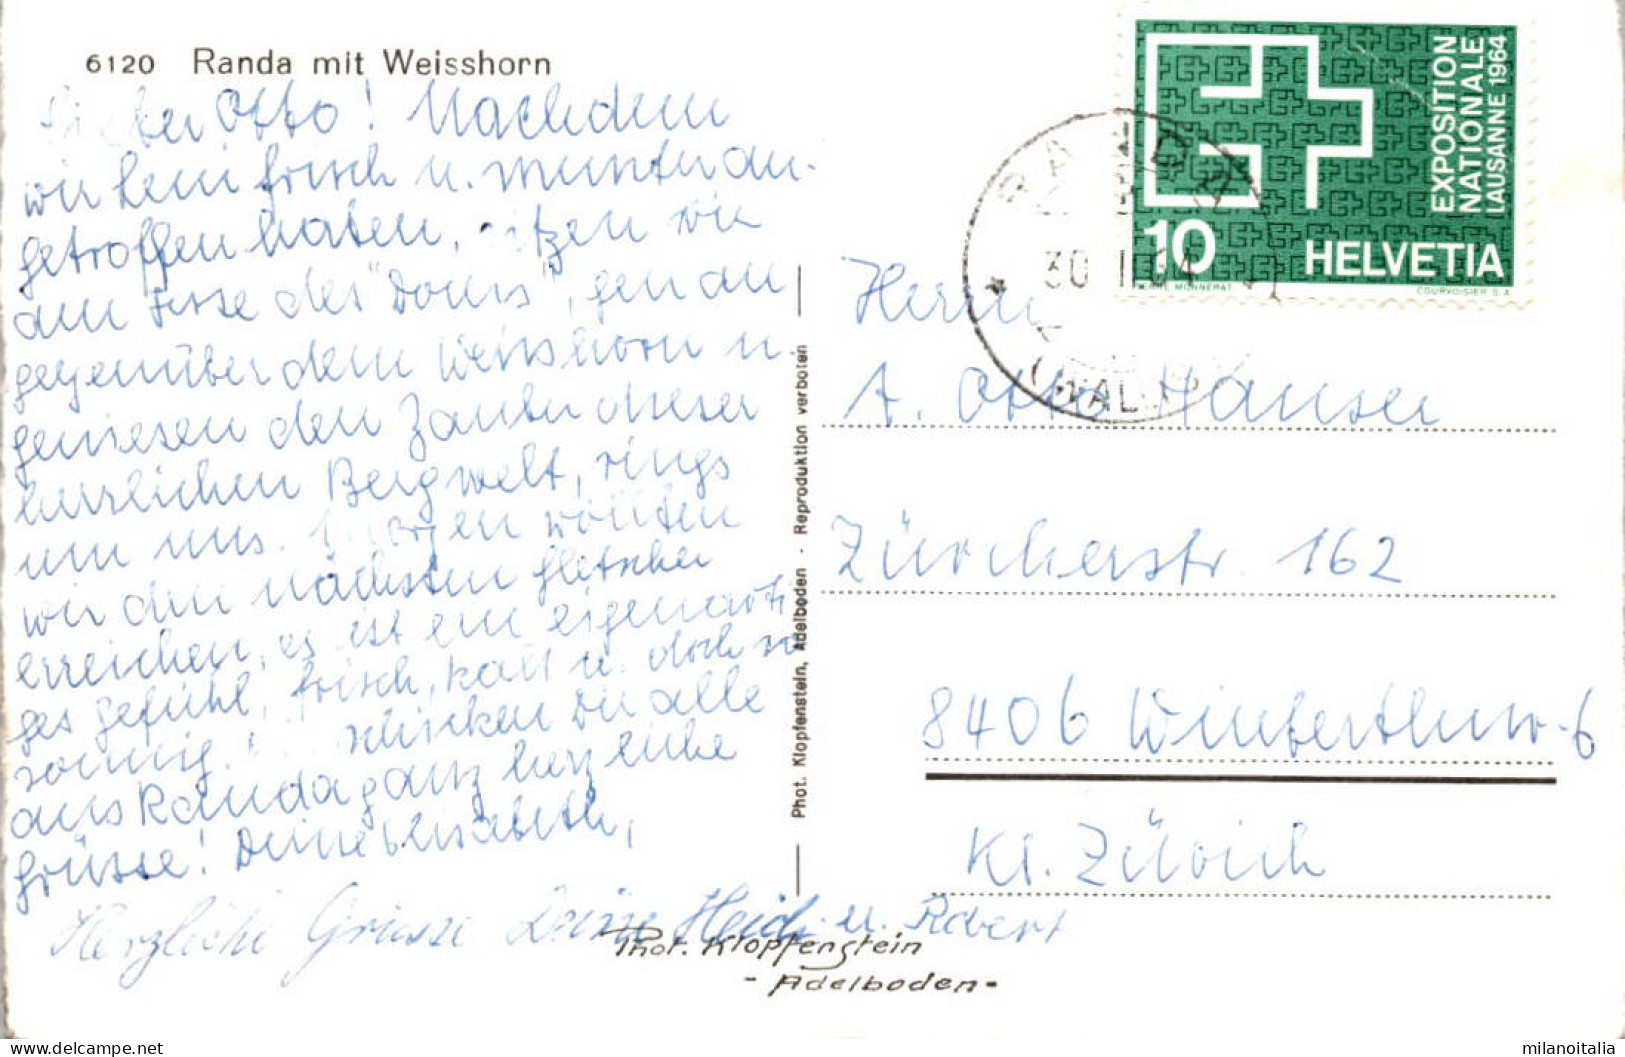 Randa Mit Weisshorn (6120) * 30. 7. 1964 - Randa